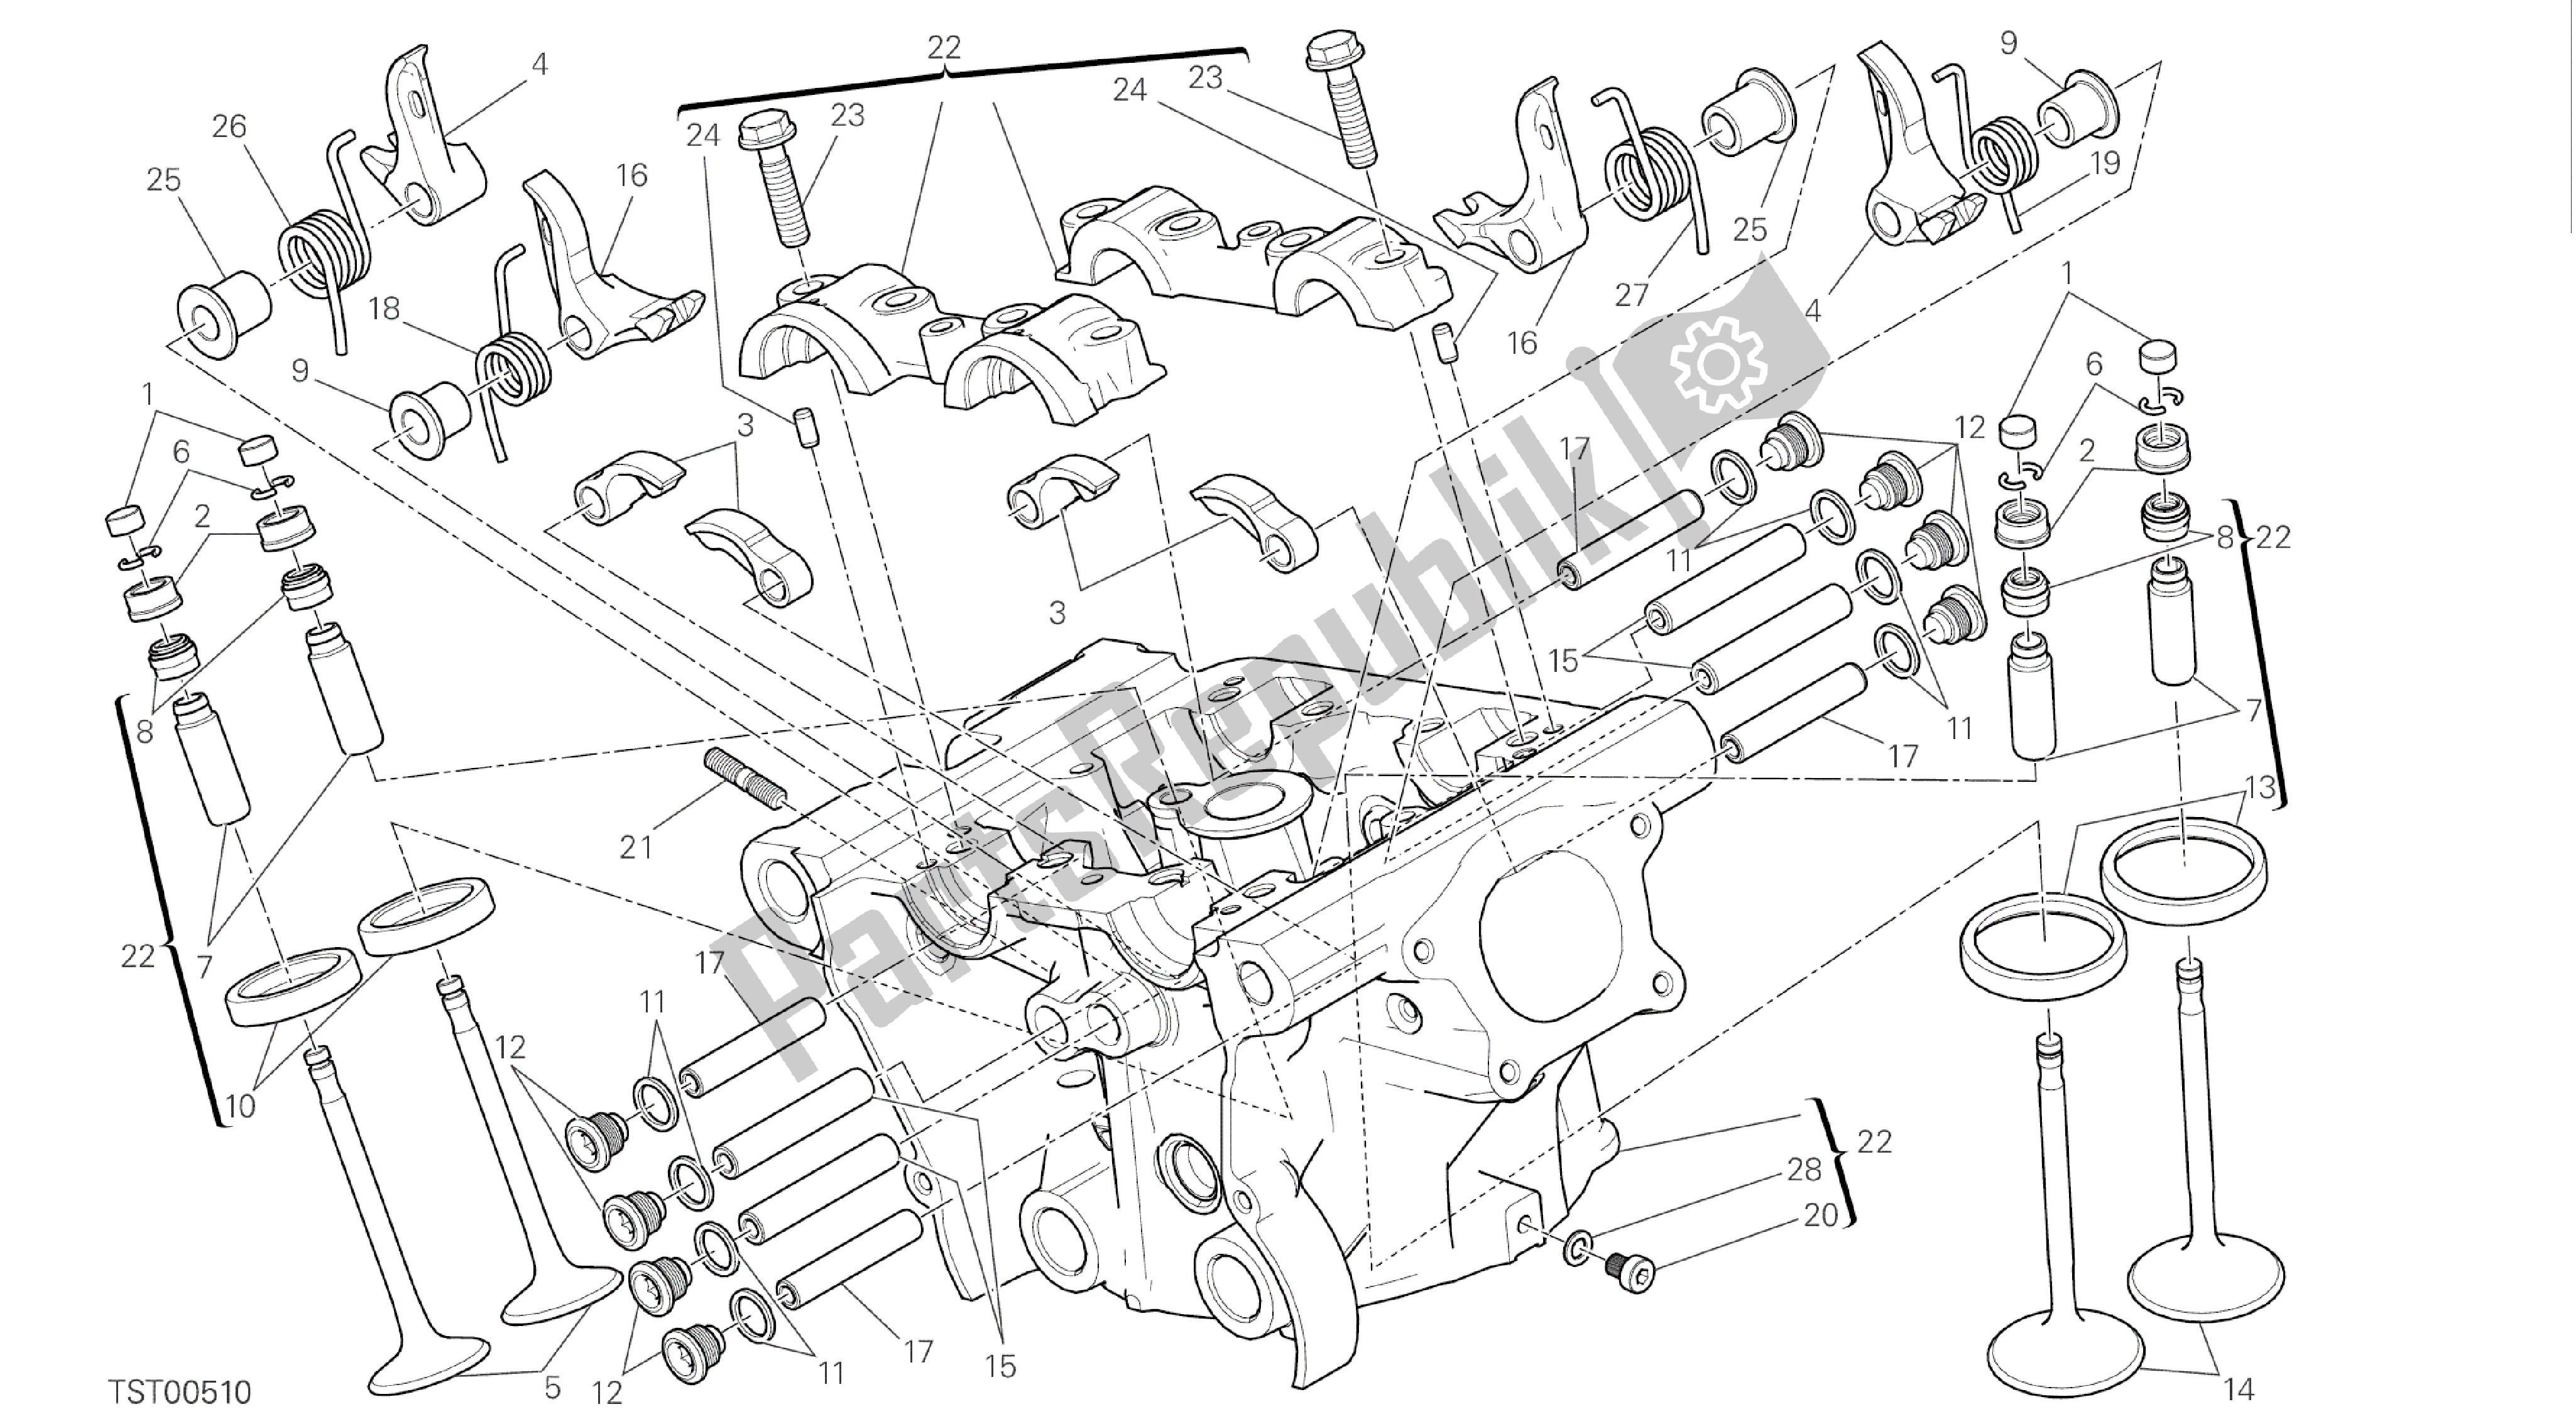 Todas las partes para Dibujo 014 - Motor De Grupo De Cabezal Vertical [mod: M 1200] de Ducati Monster 1200 2016